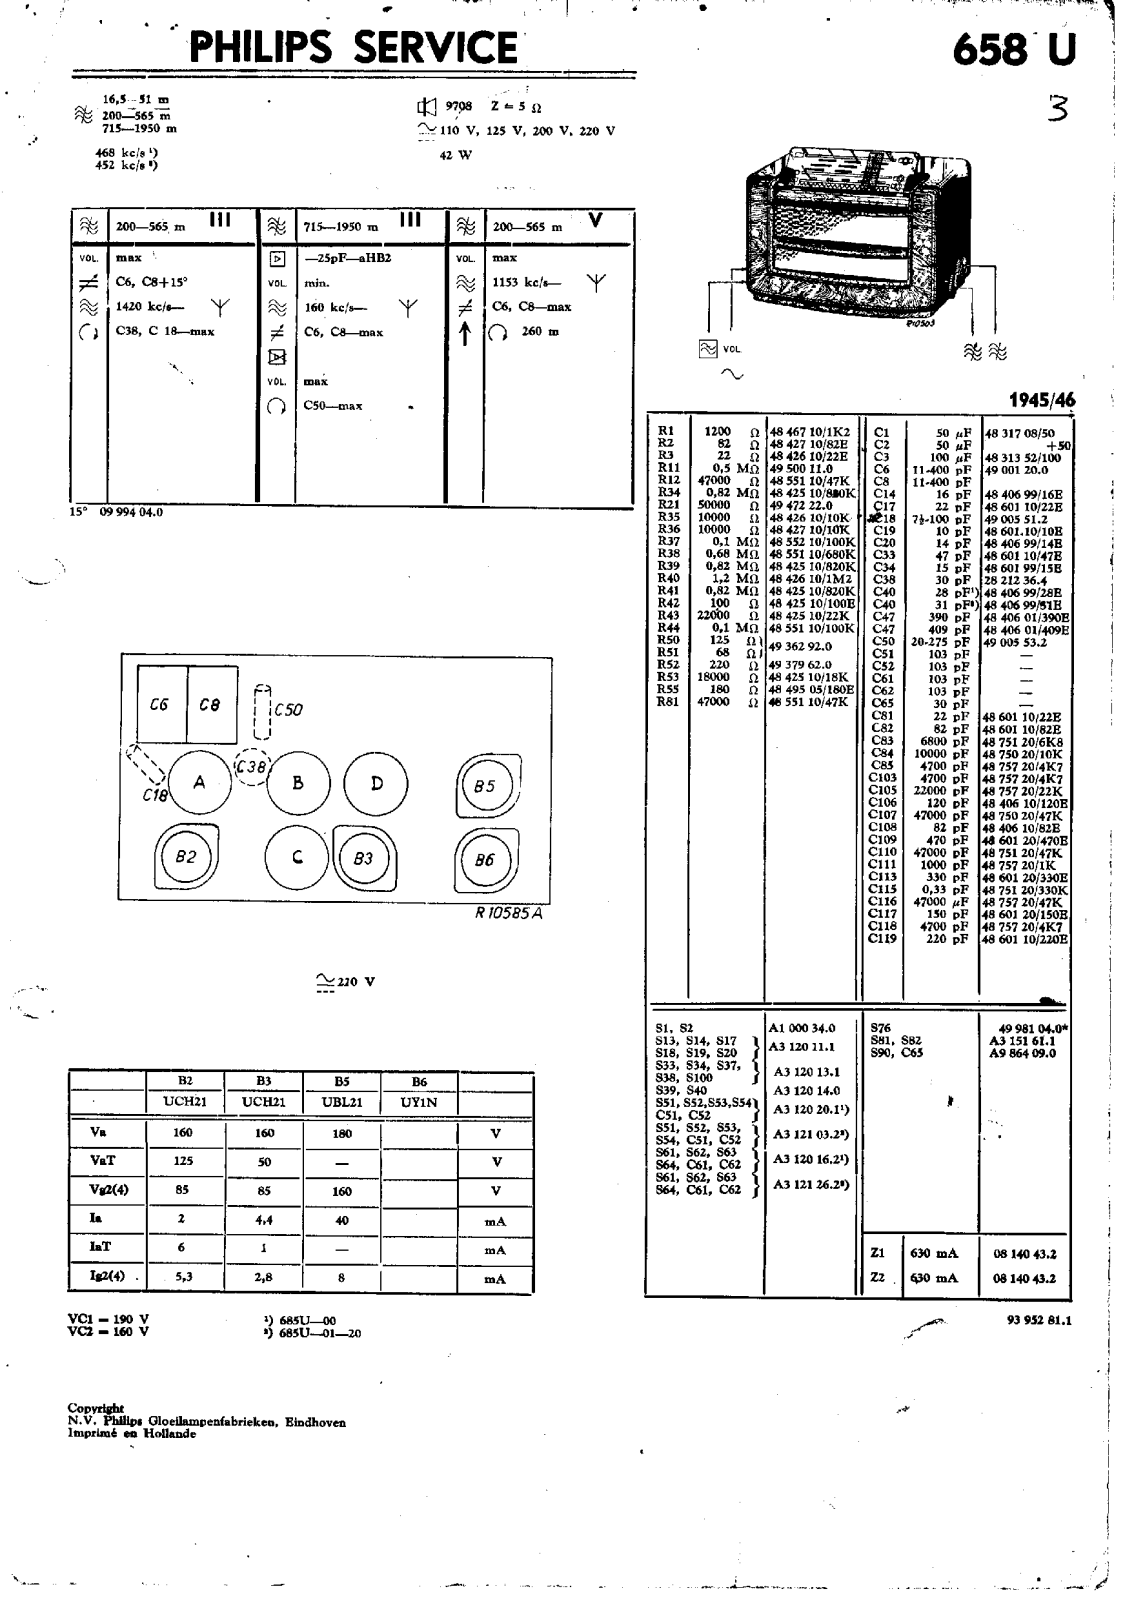 Philips 658-U Service Manual